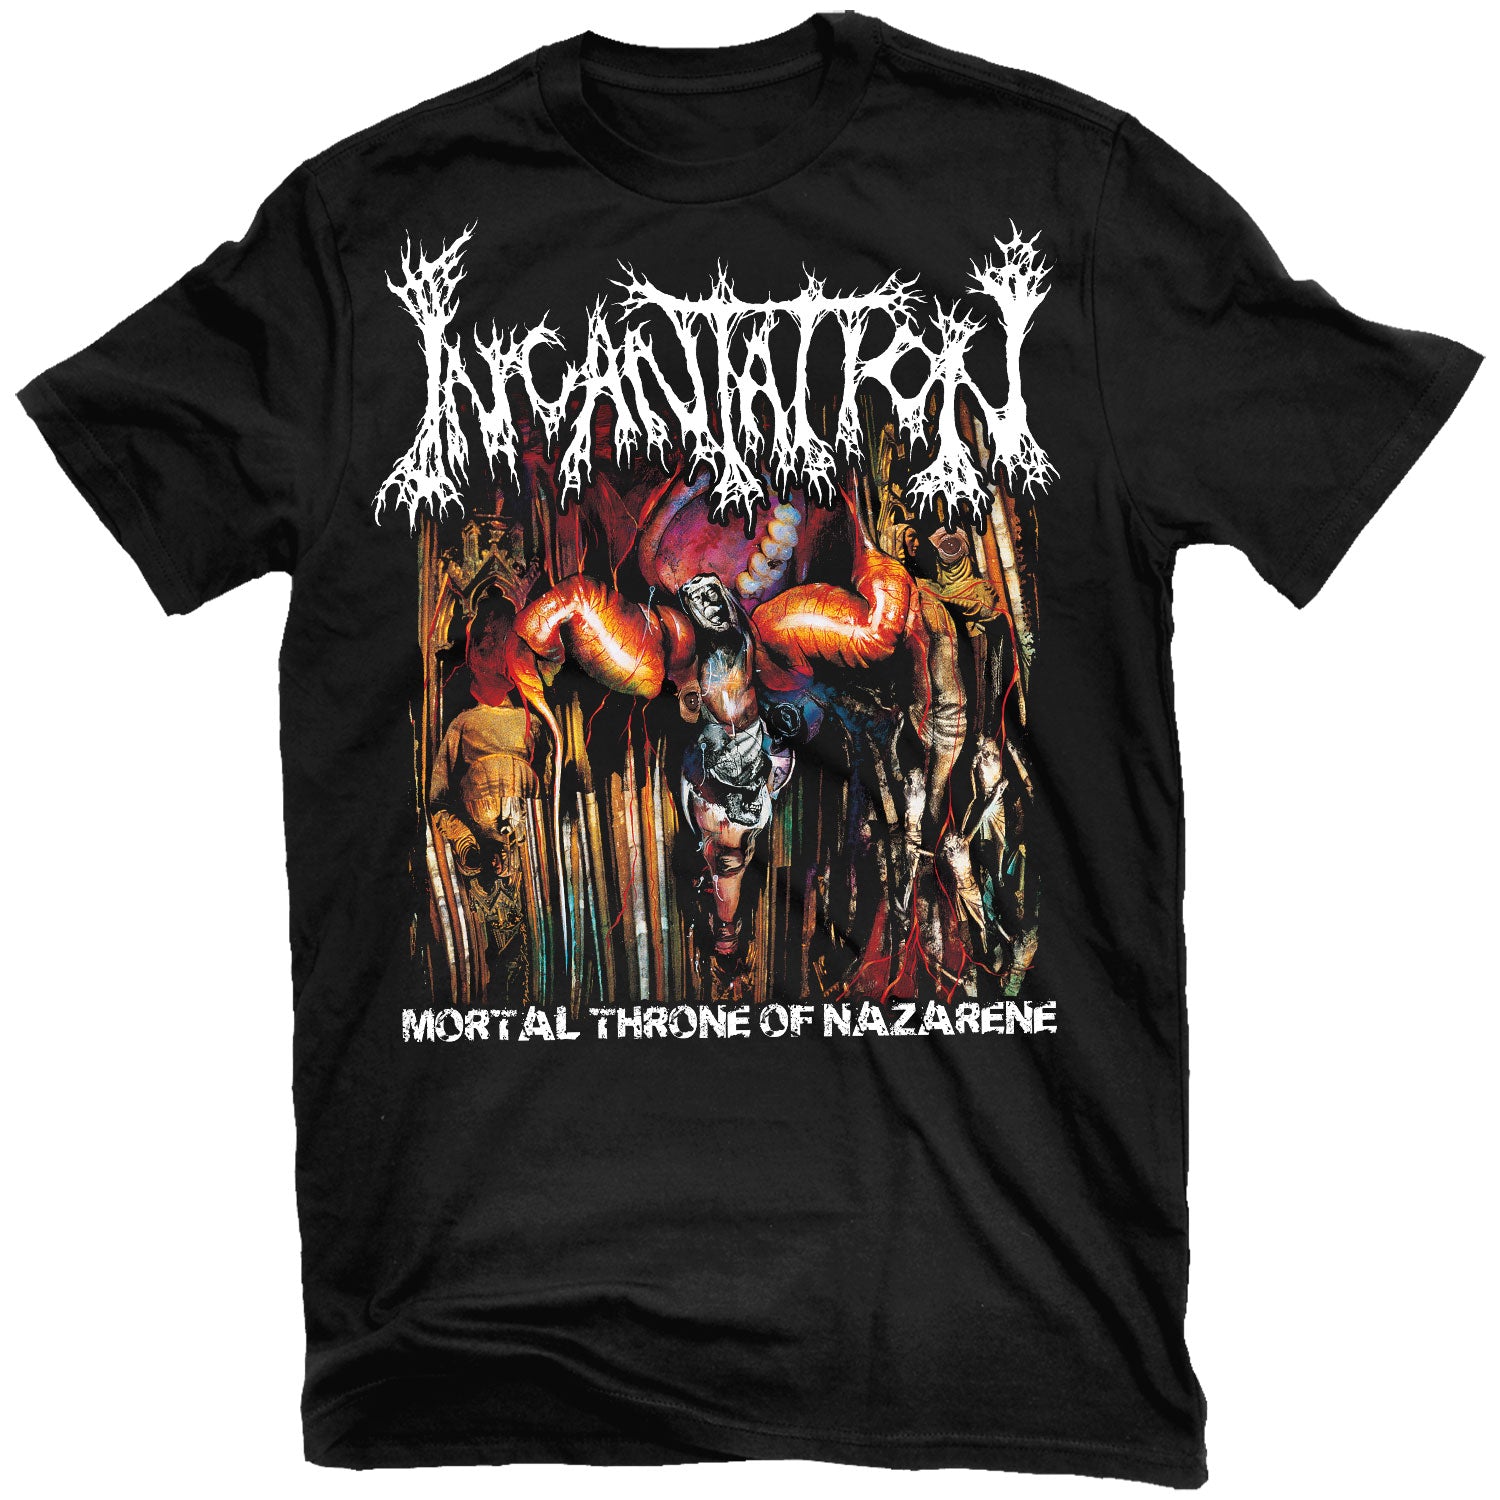 Incantation "Mortal Throne of Nazarene" T-Shirt